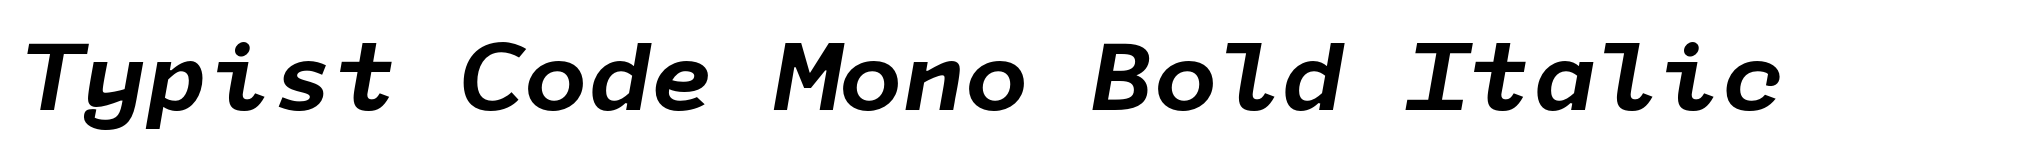 Typist Code Mono Bold Italic image